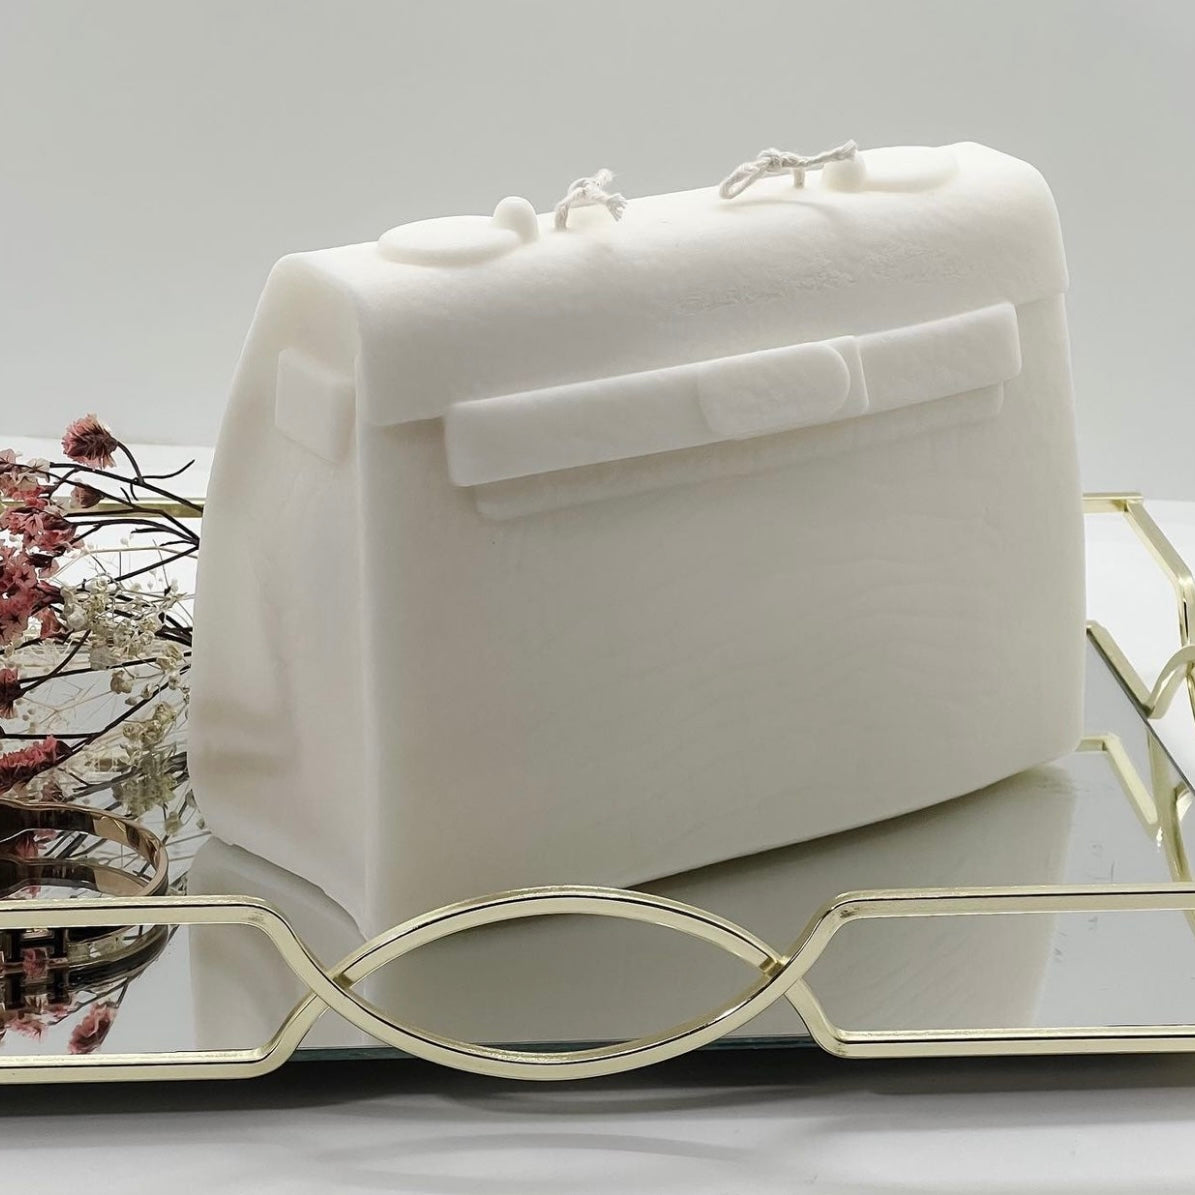 The Hermès Birkin: How to take care of it – Bagpad